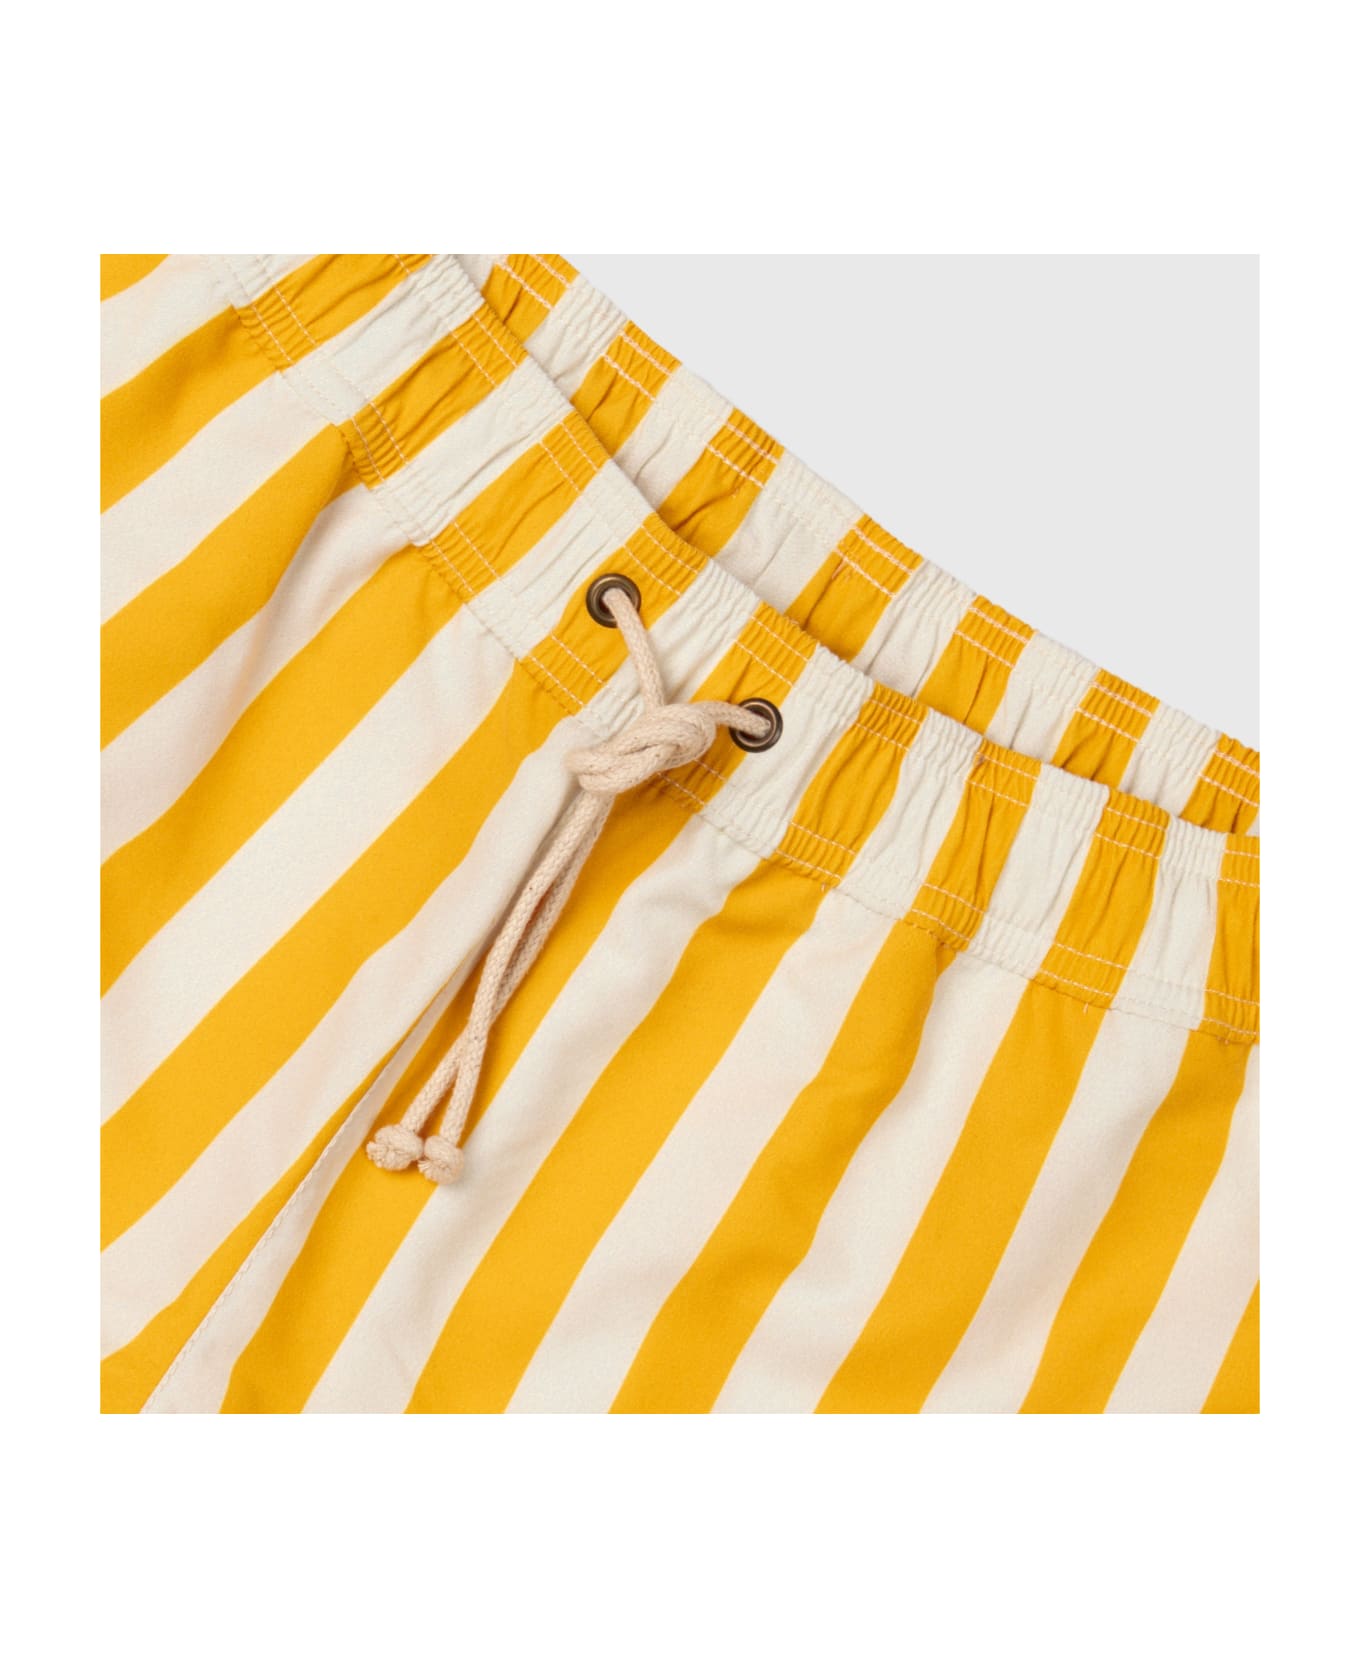 Ripa Ripa Paraggi Giallo Swim Shorts - Yellow スイムトランクス